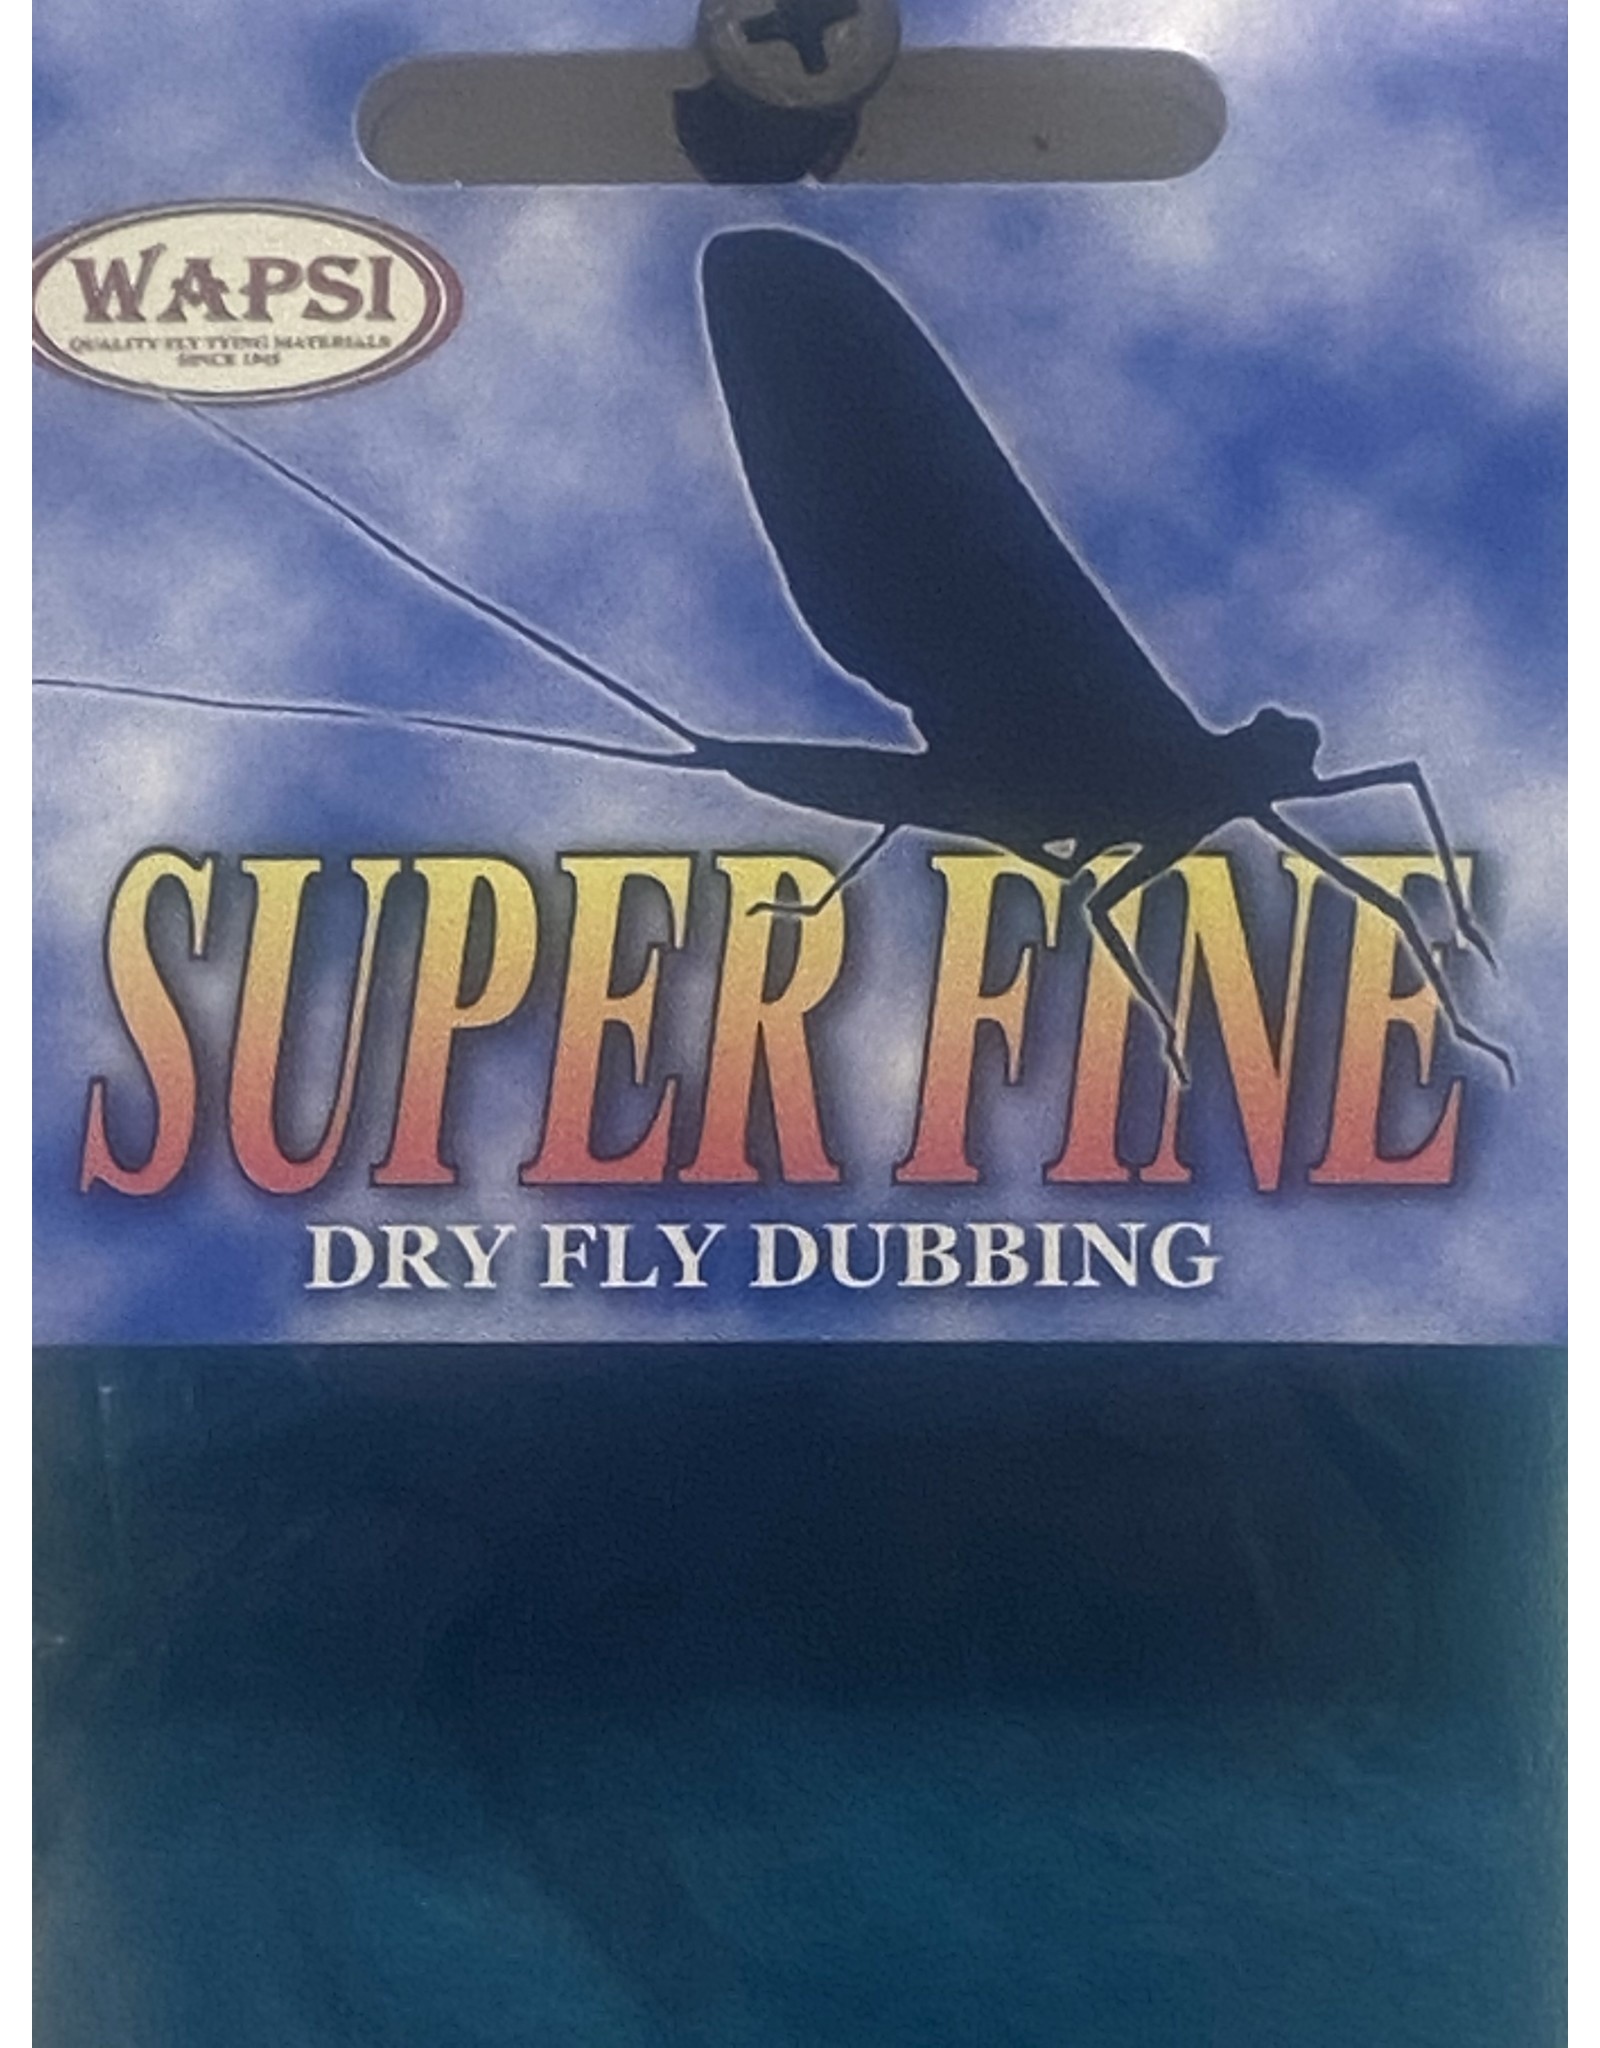 Wapsi Superfine - Damsel Blue